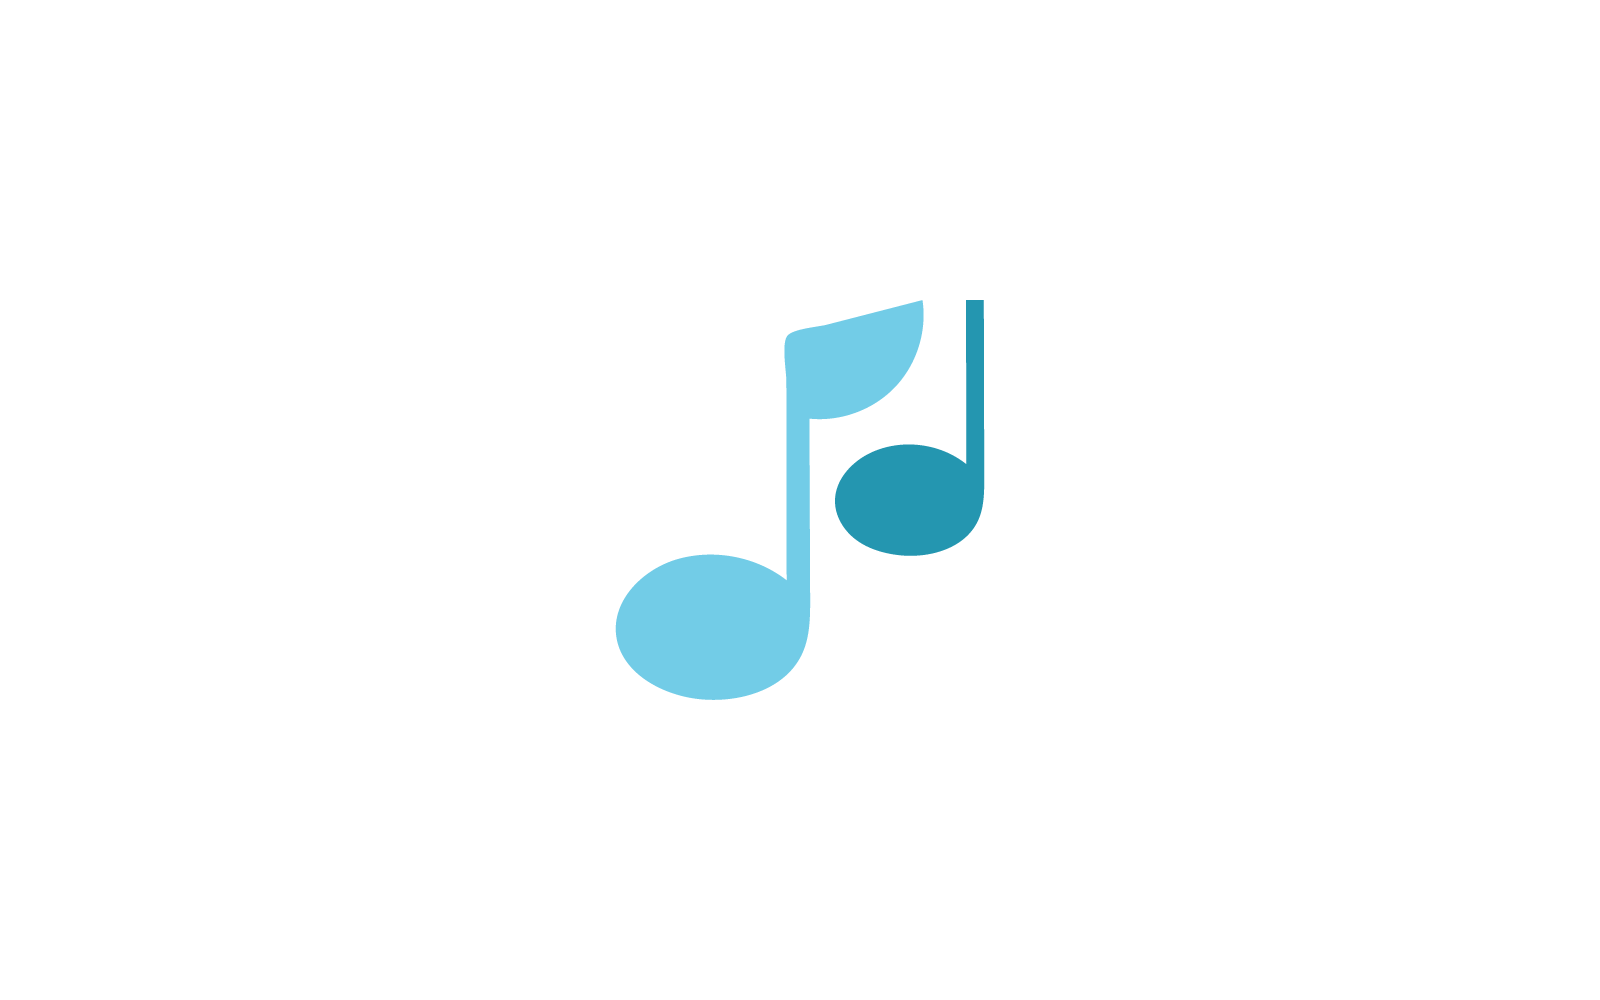 Music illustration logo and symbol design template